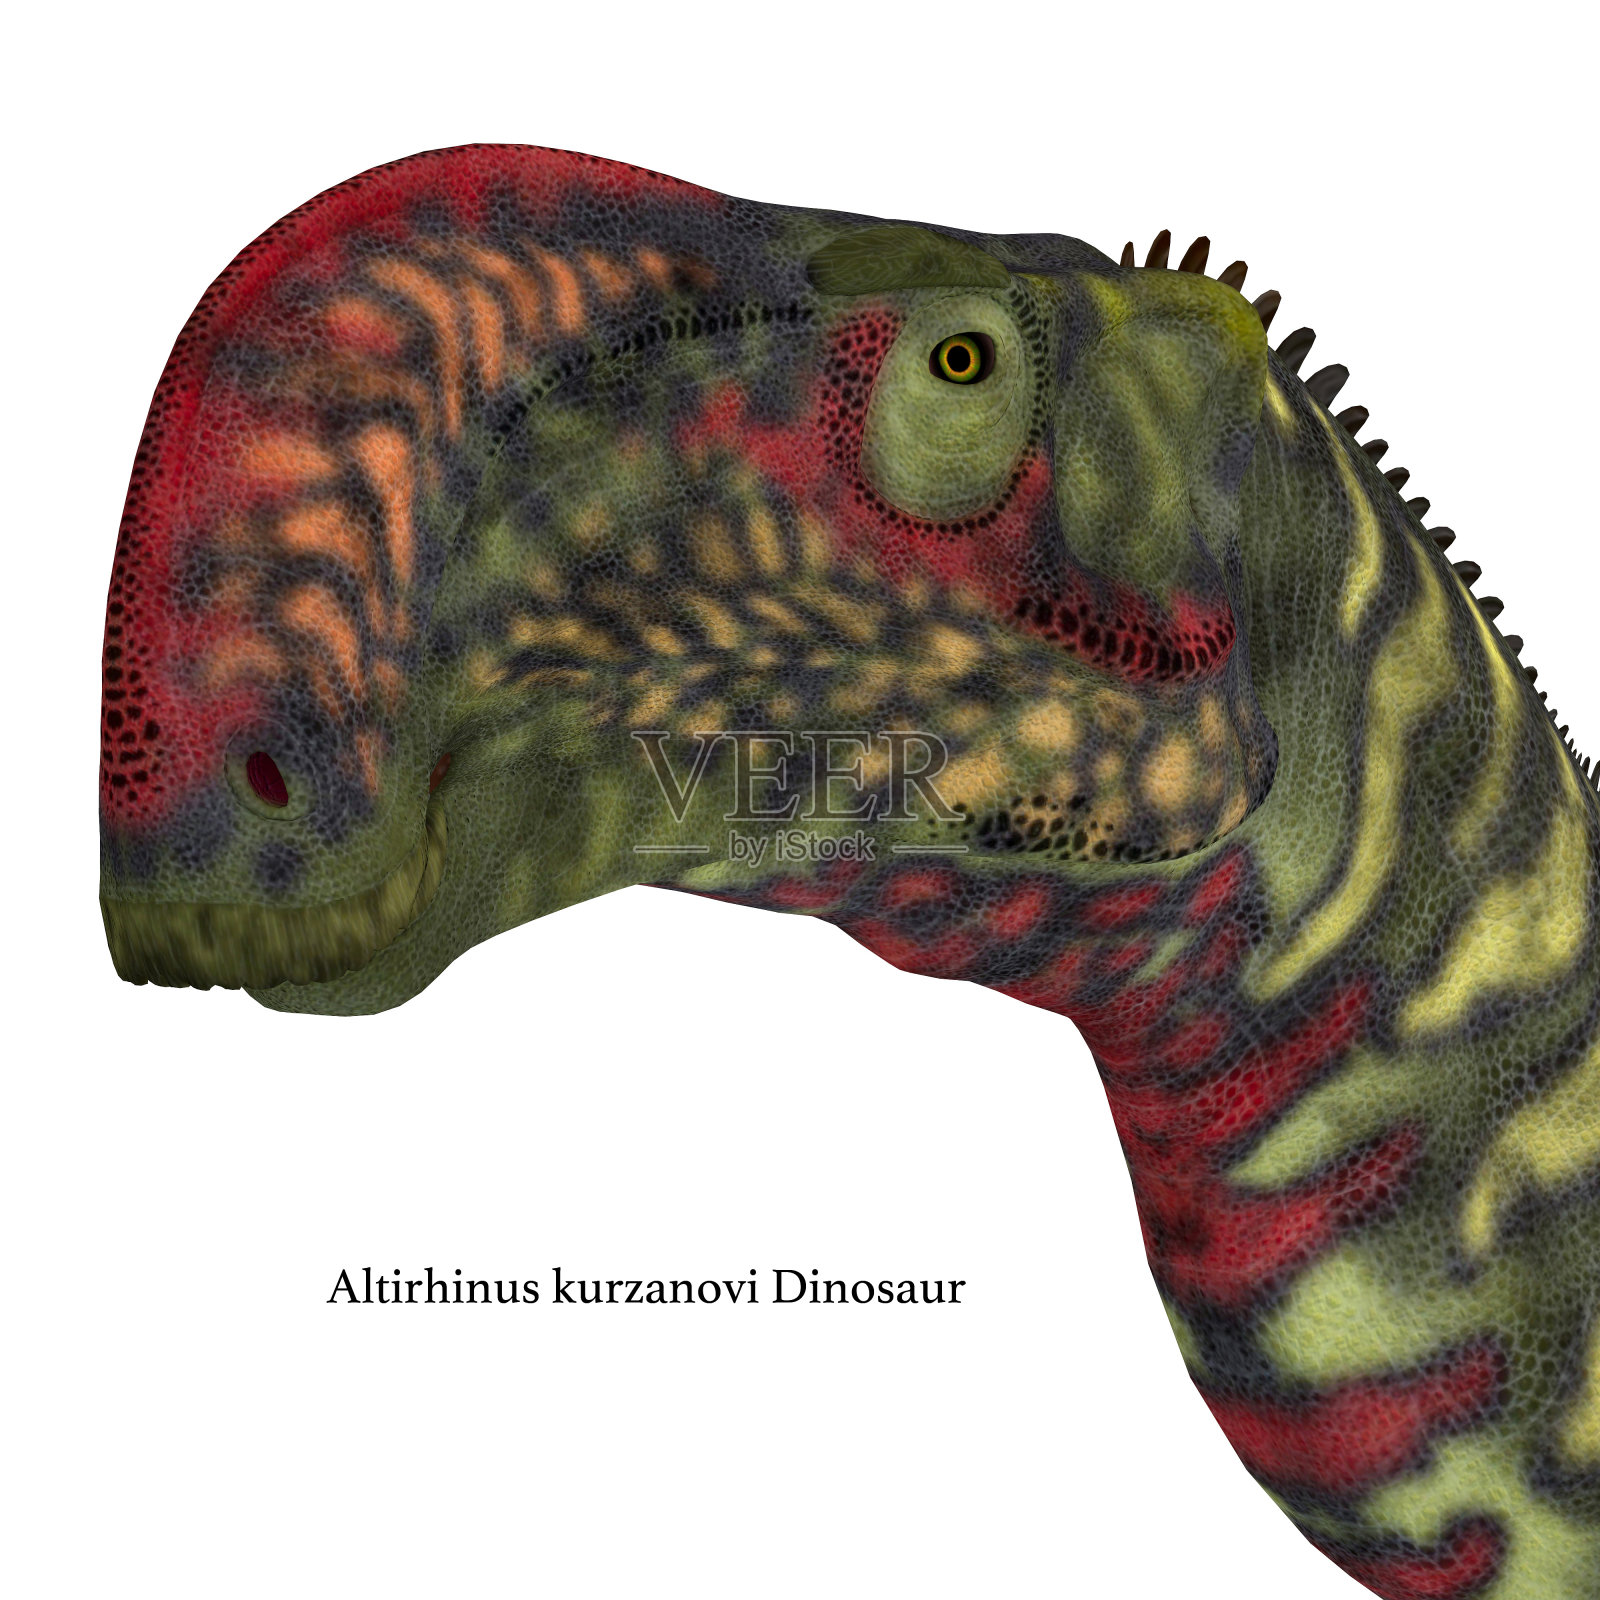 Altirhinus恐龙头插画图片素材